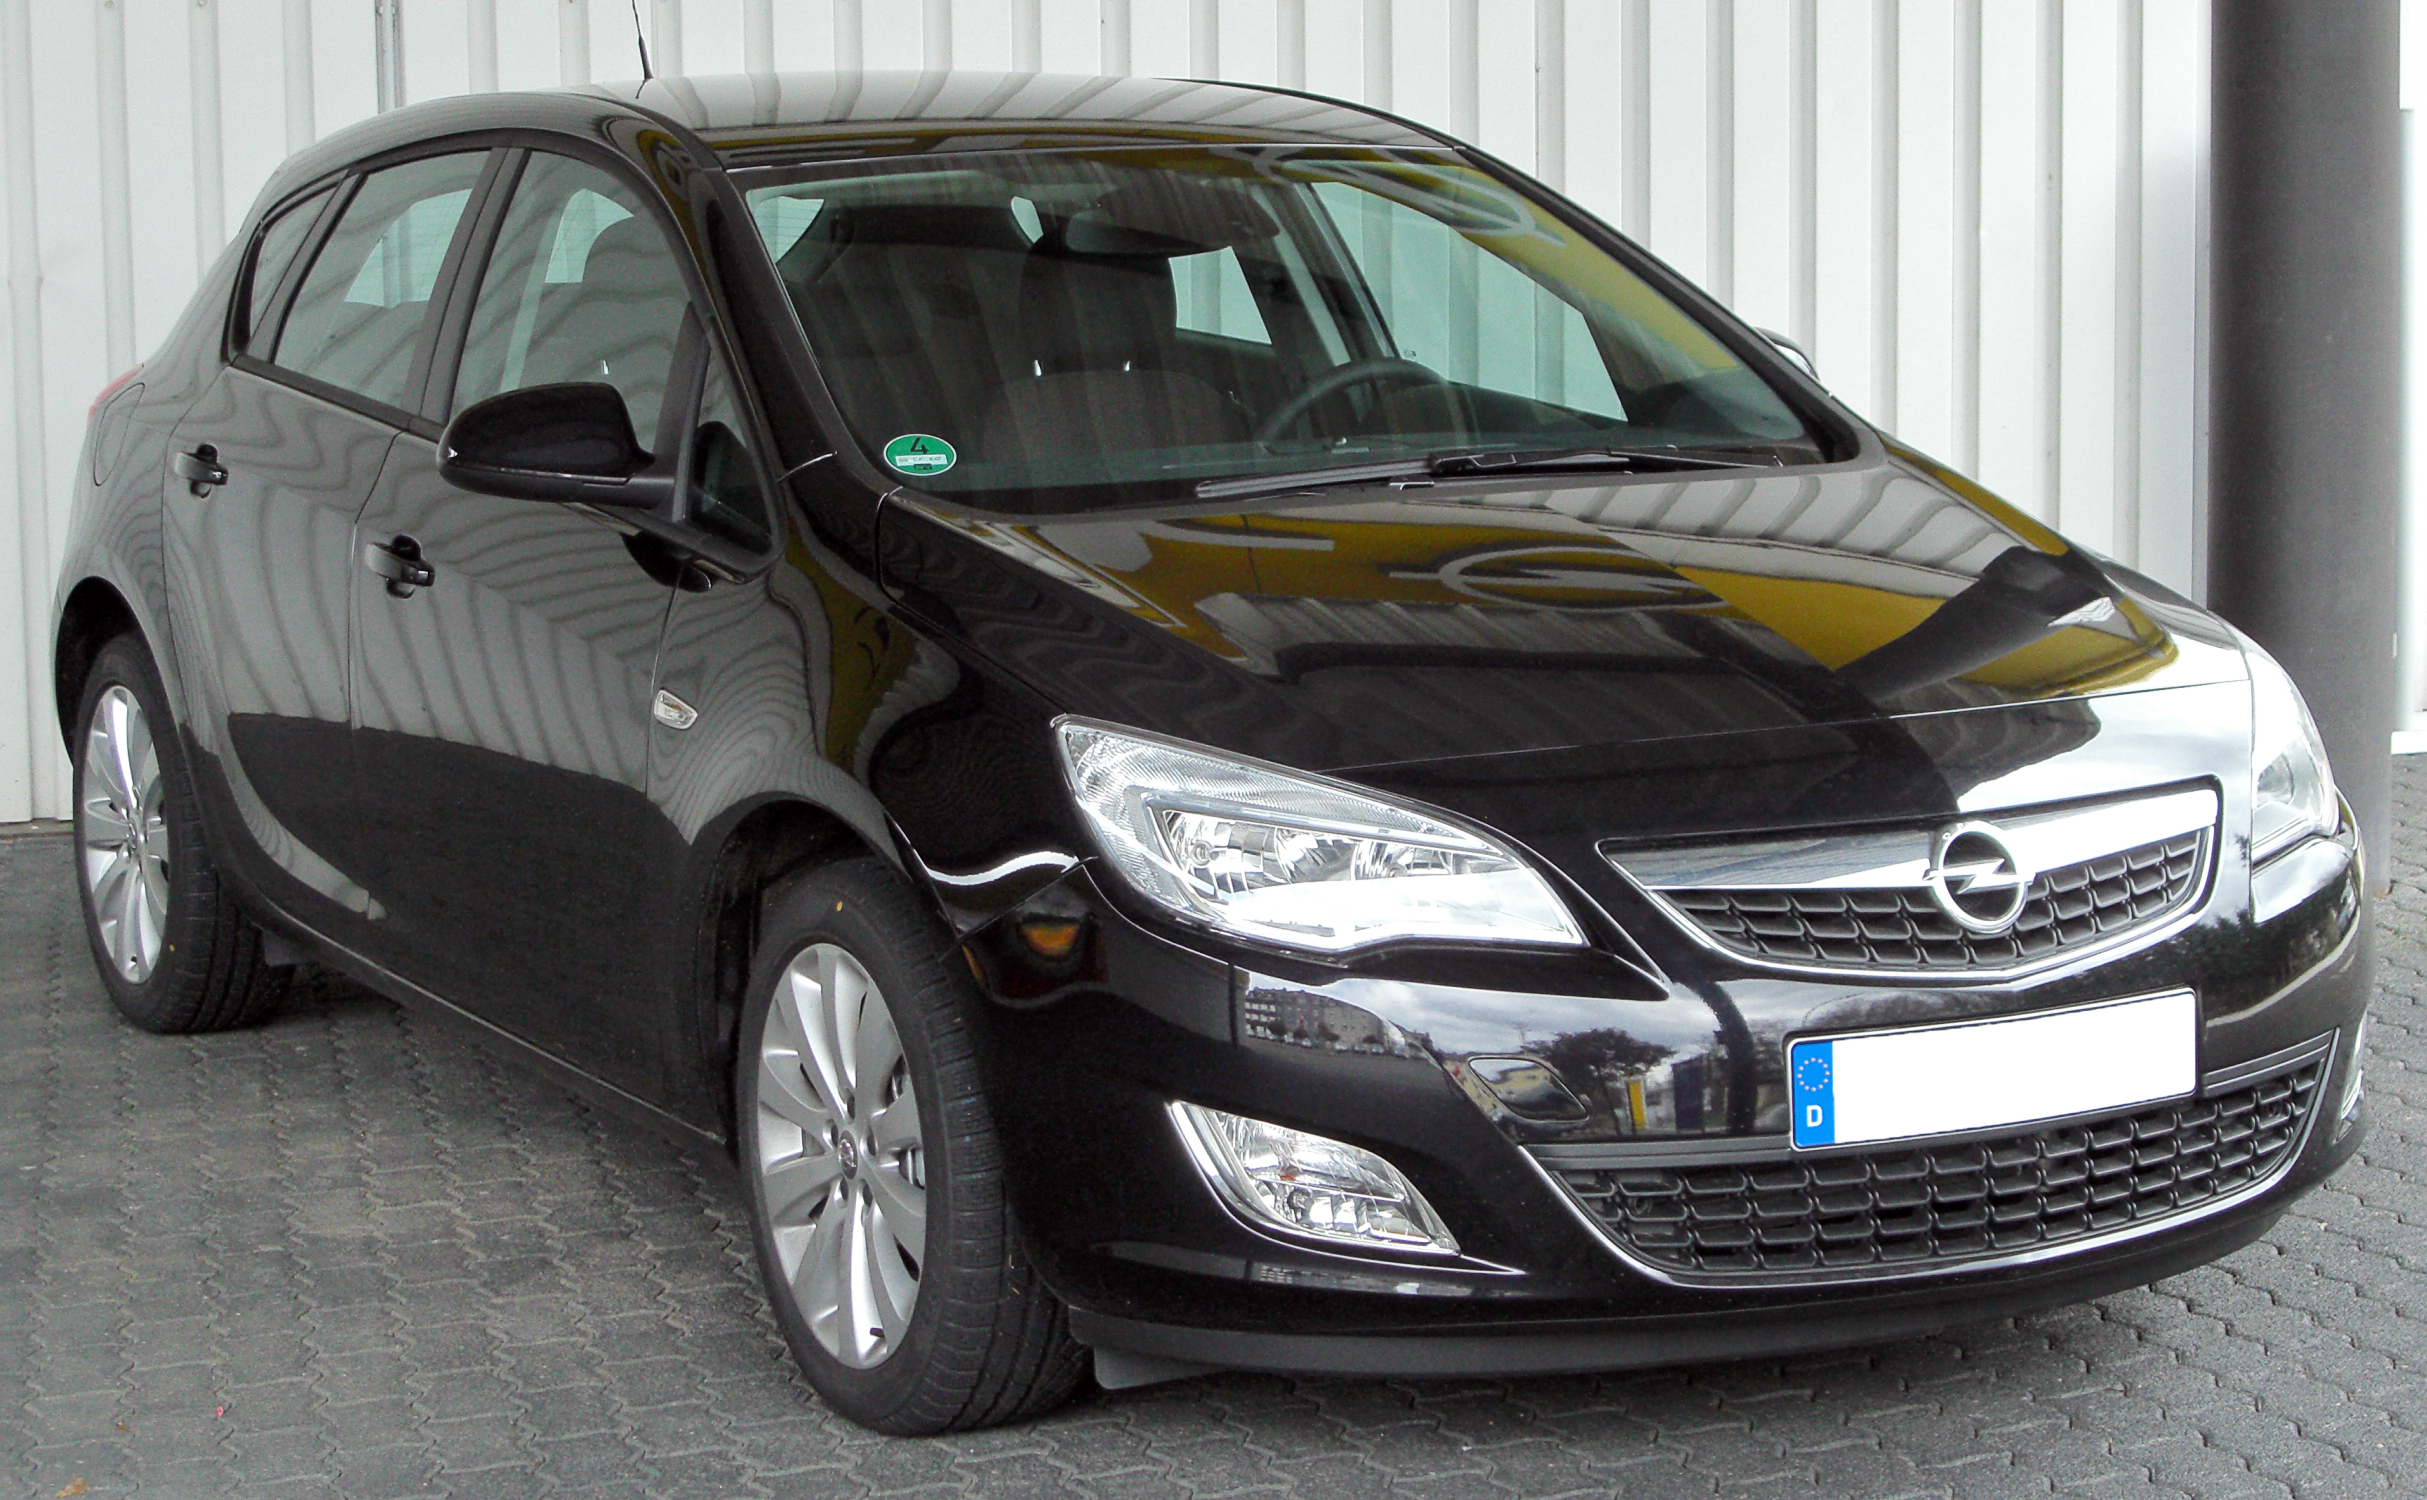 File:Opel Astra J.JPG - Wikimedia Commons